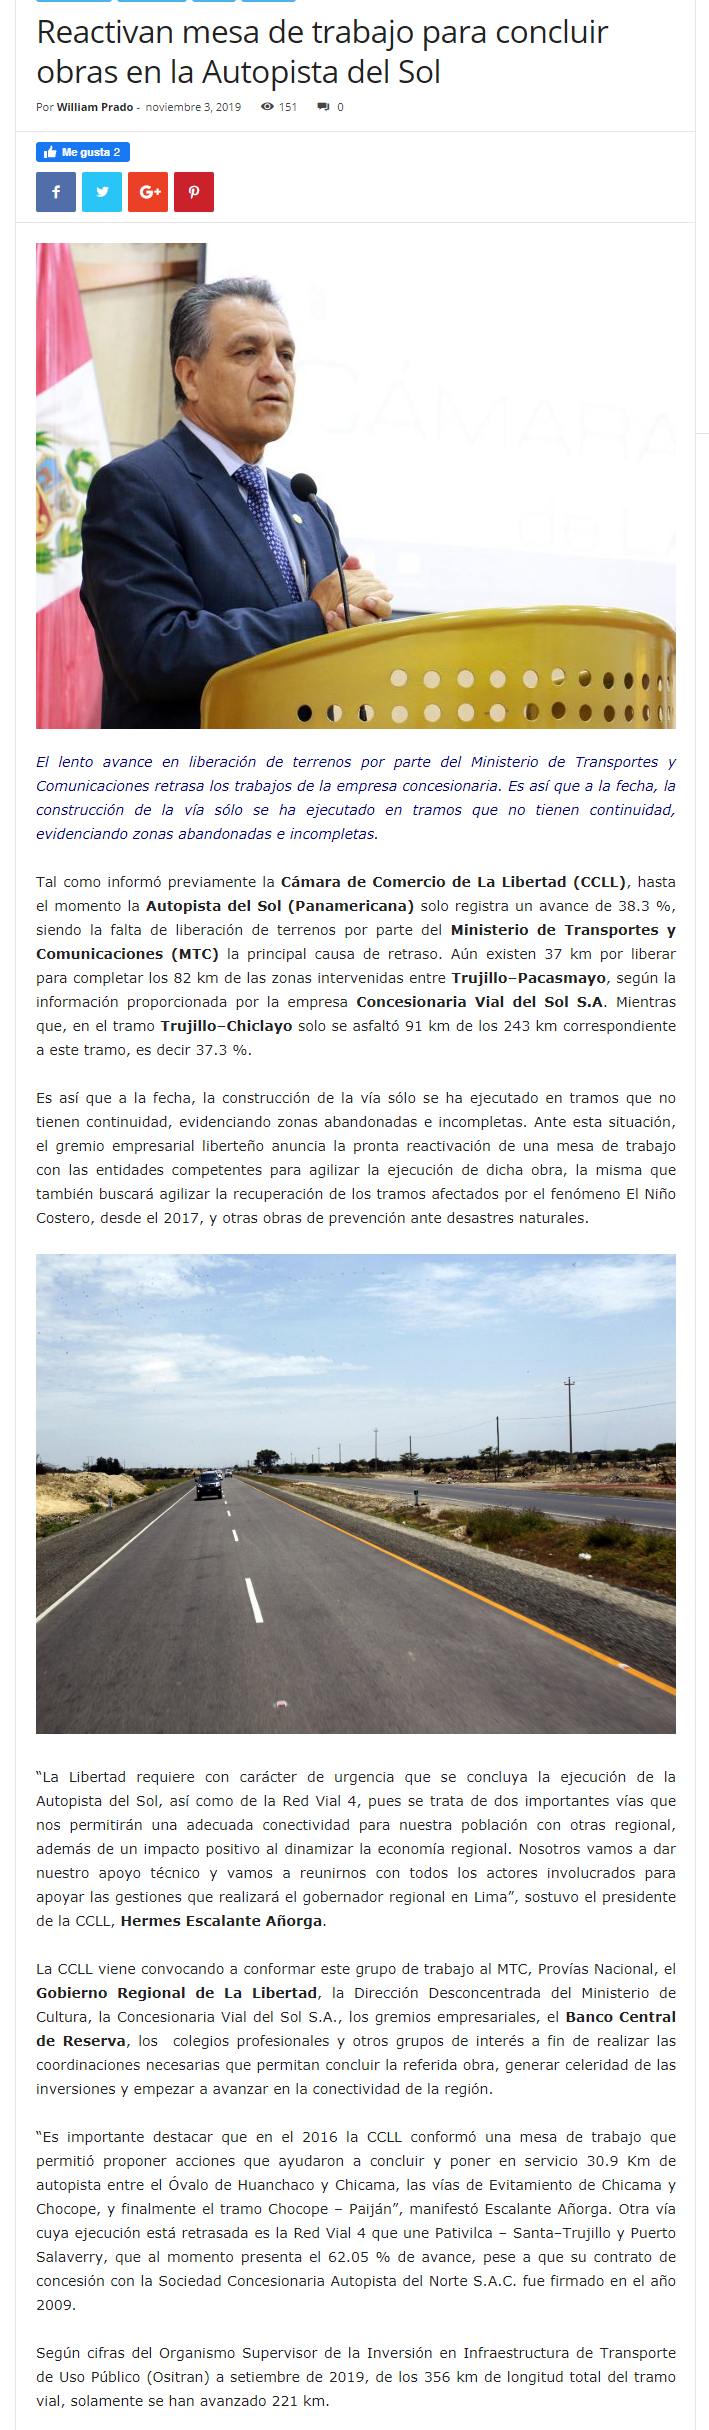 04.11.19.13 NOTICIAS RESPONSABLES Autopista del Sol